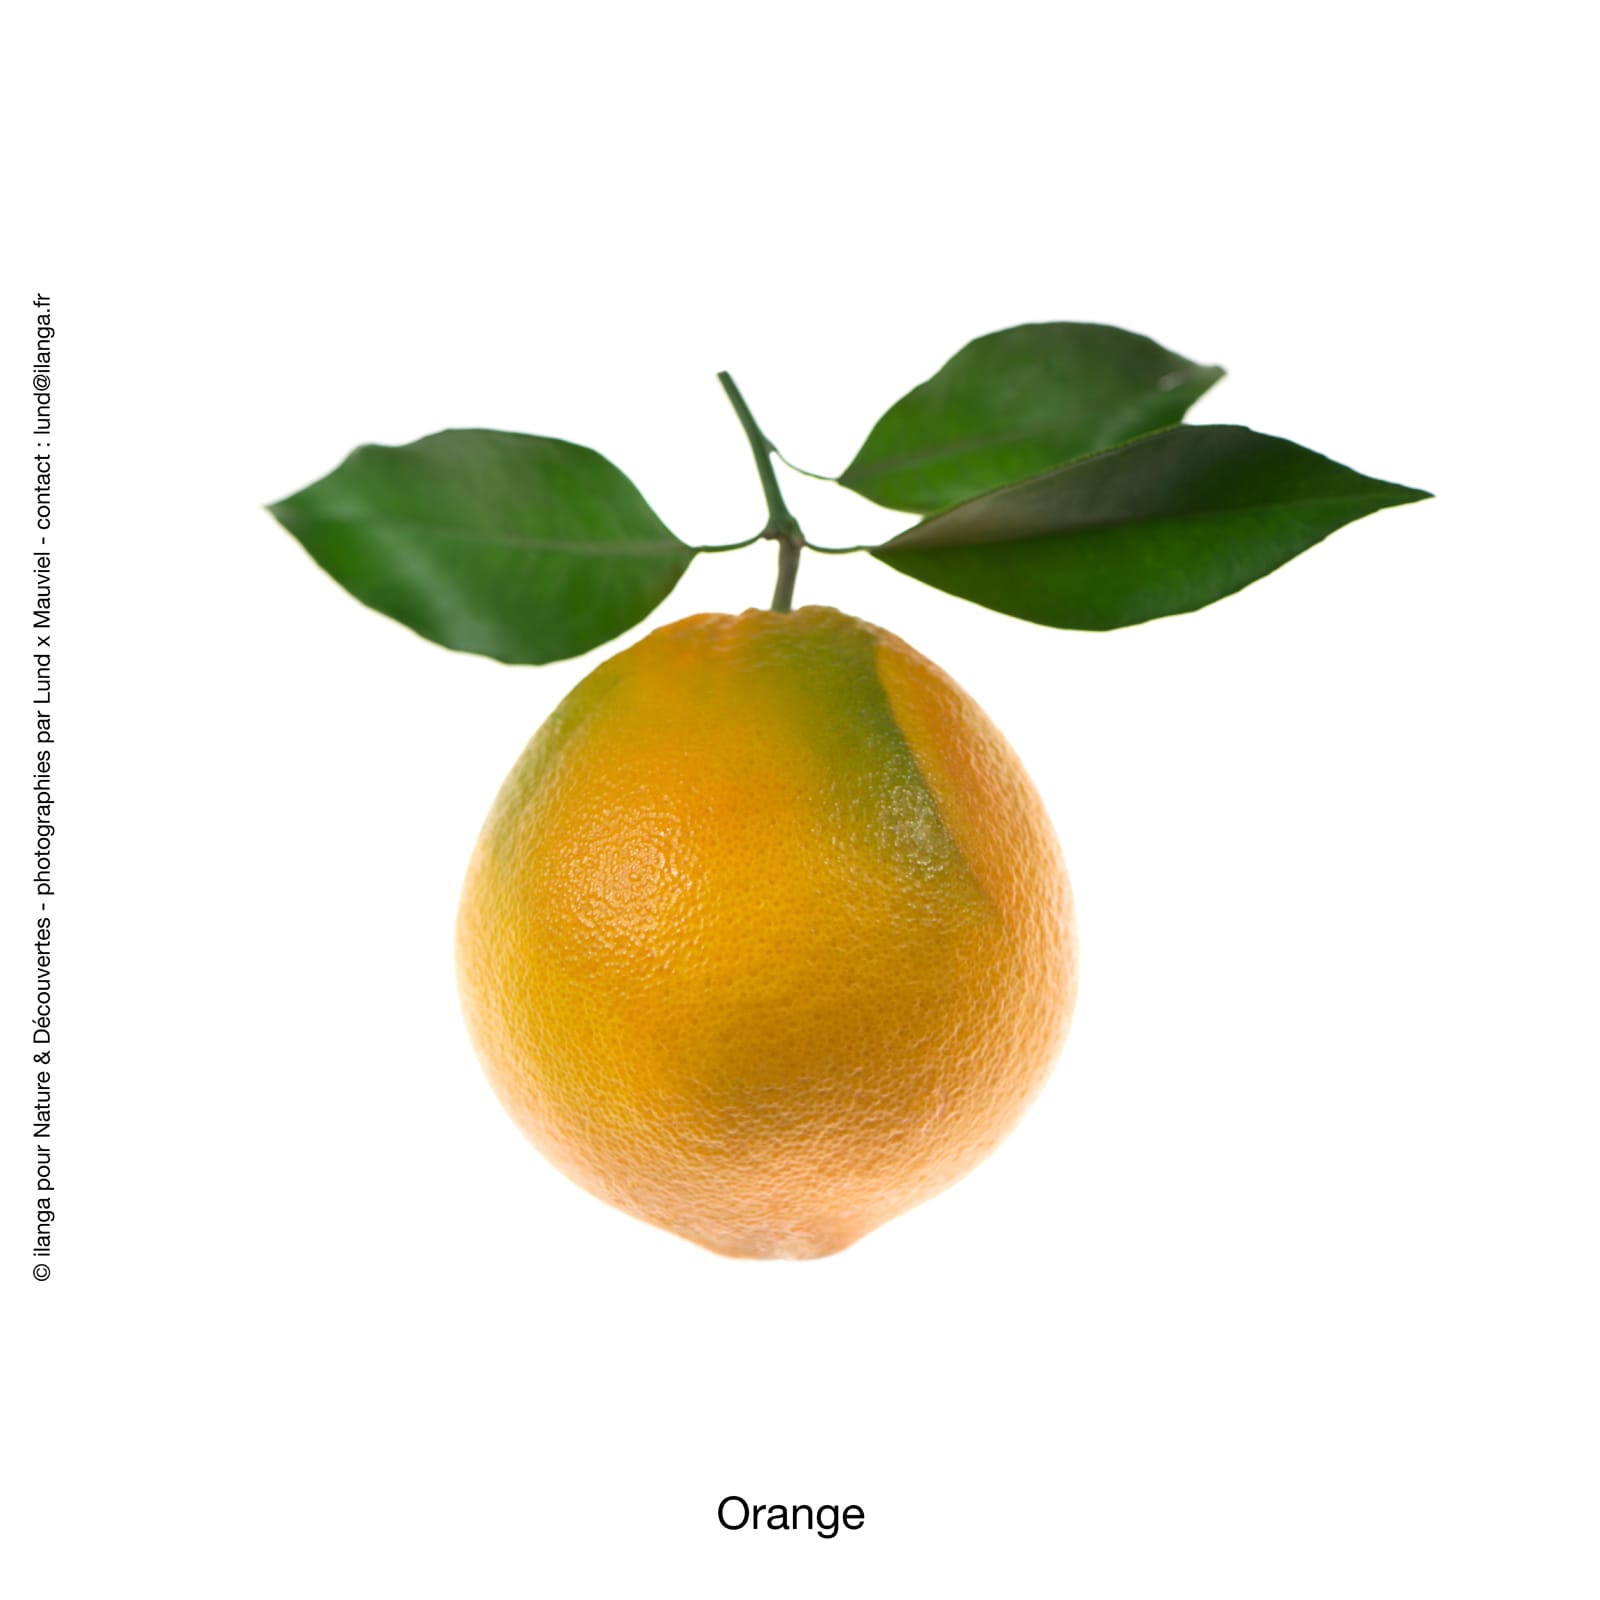 Huile Essentielle Orange douce d'Italie - MONDO BOUGIES